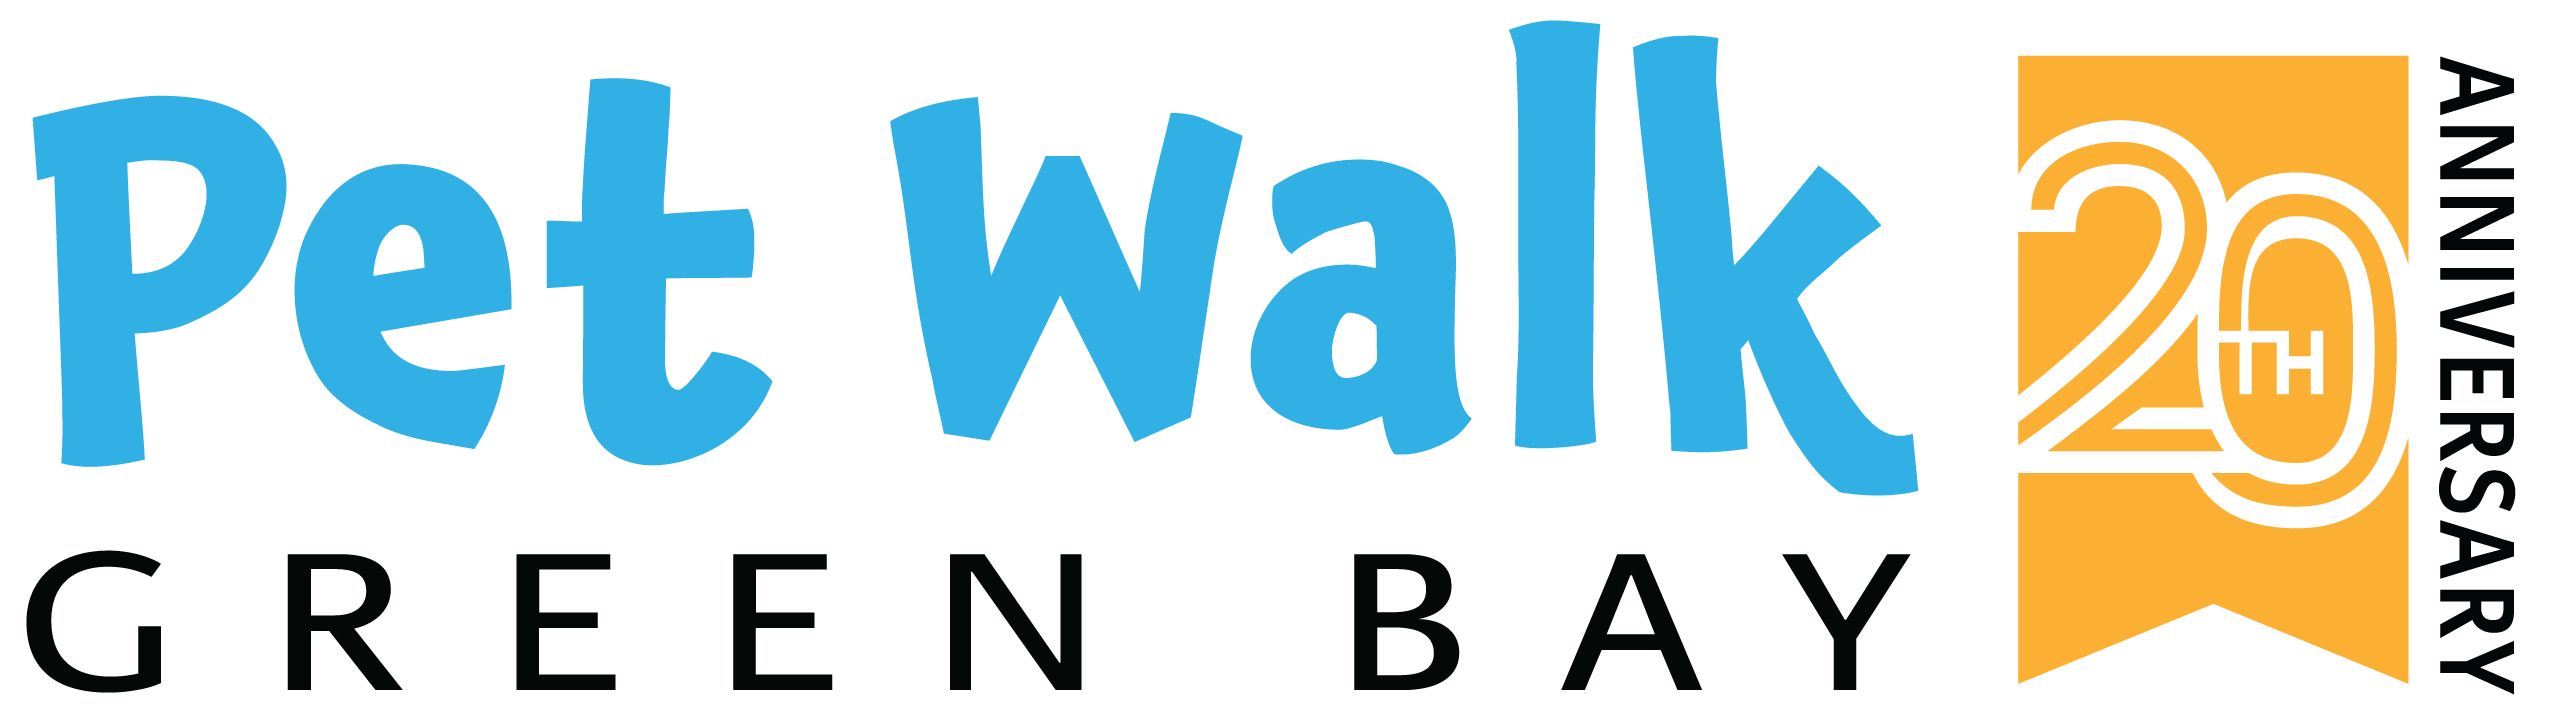 2019 Pet Walk GB Anniversary Logo